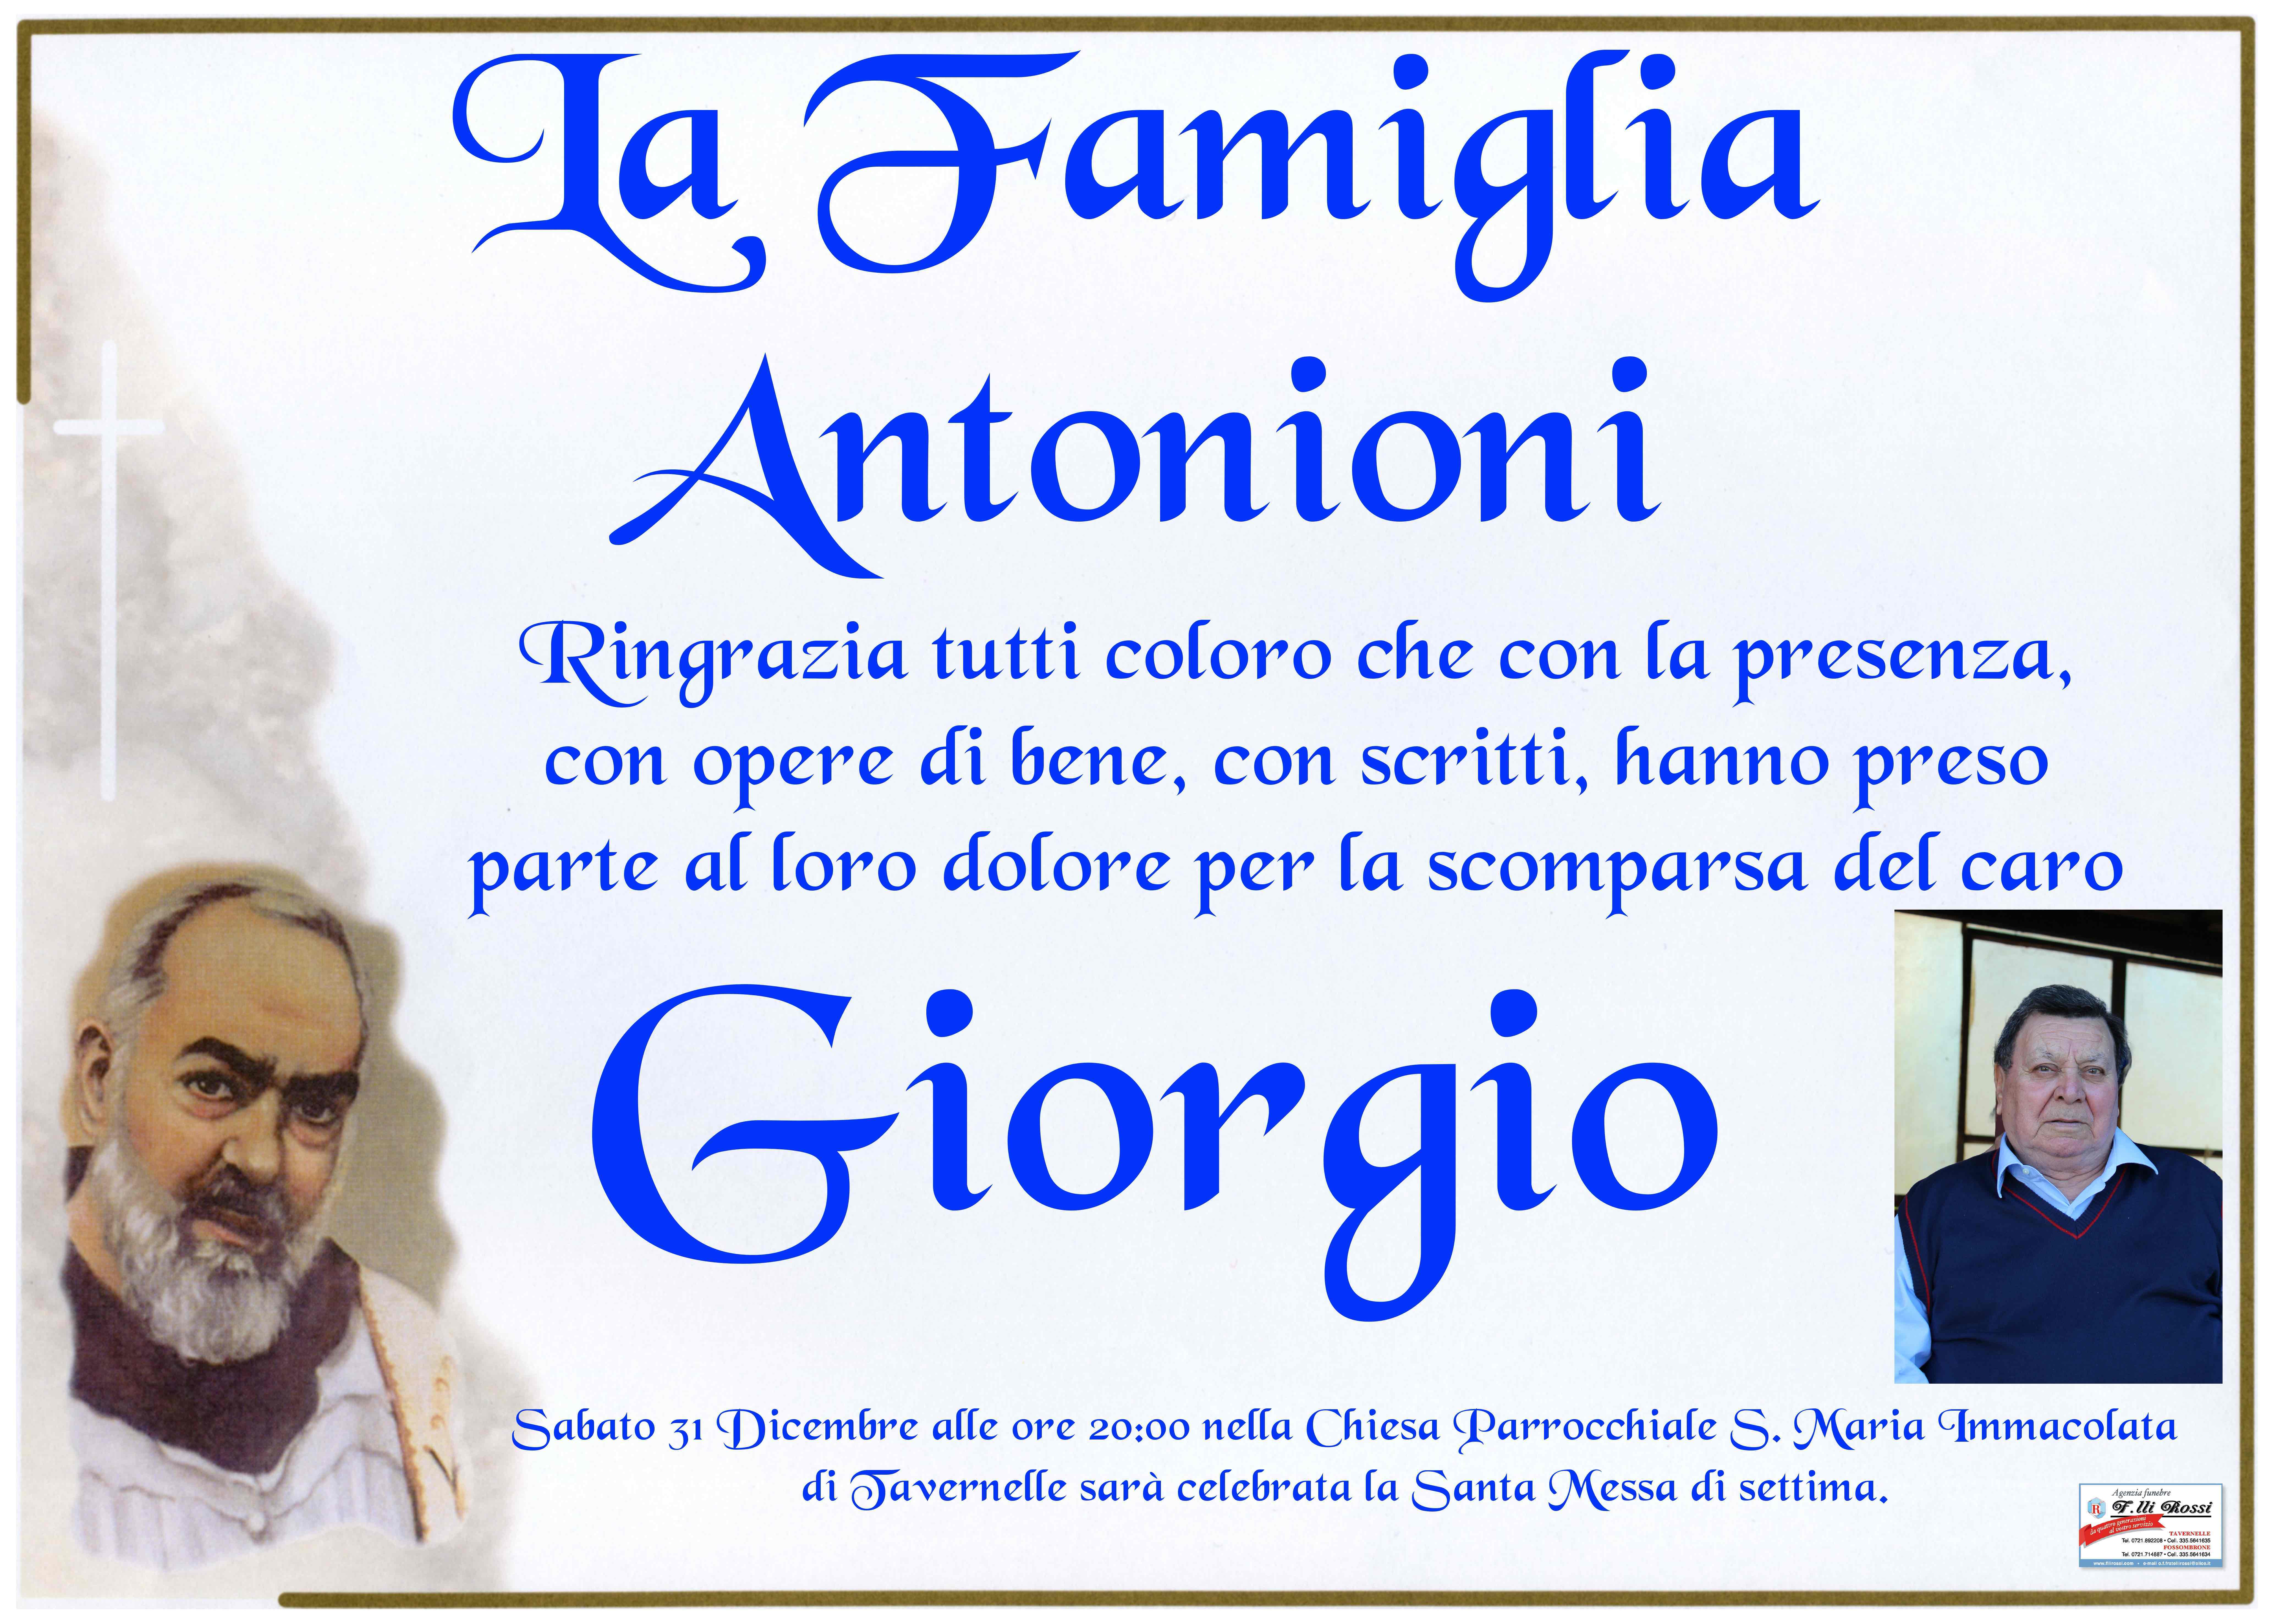 Giorgio Antonioni